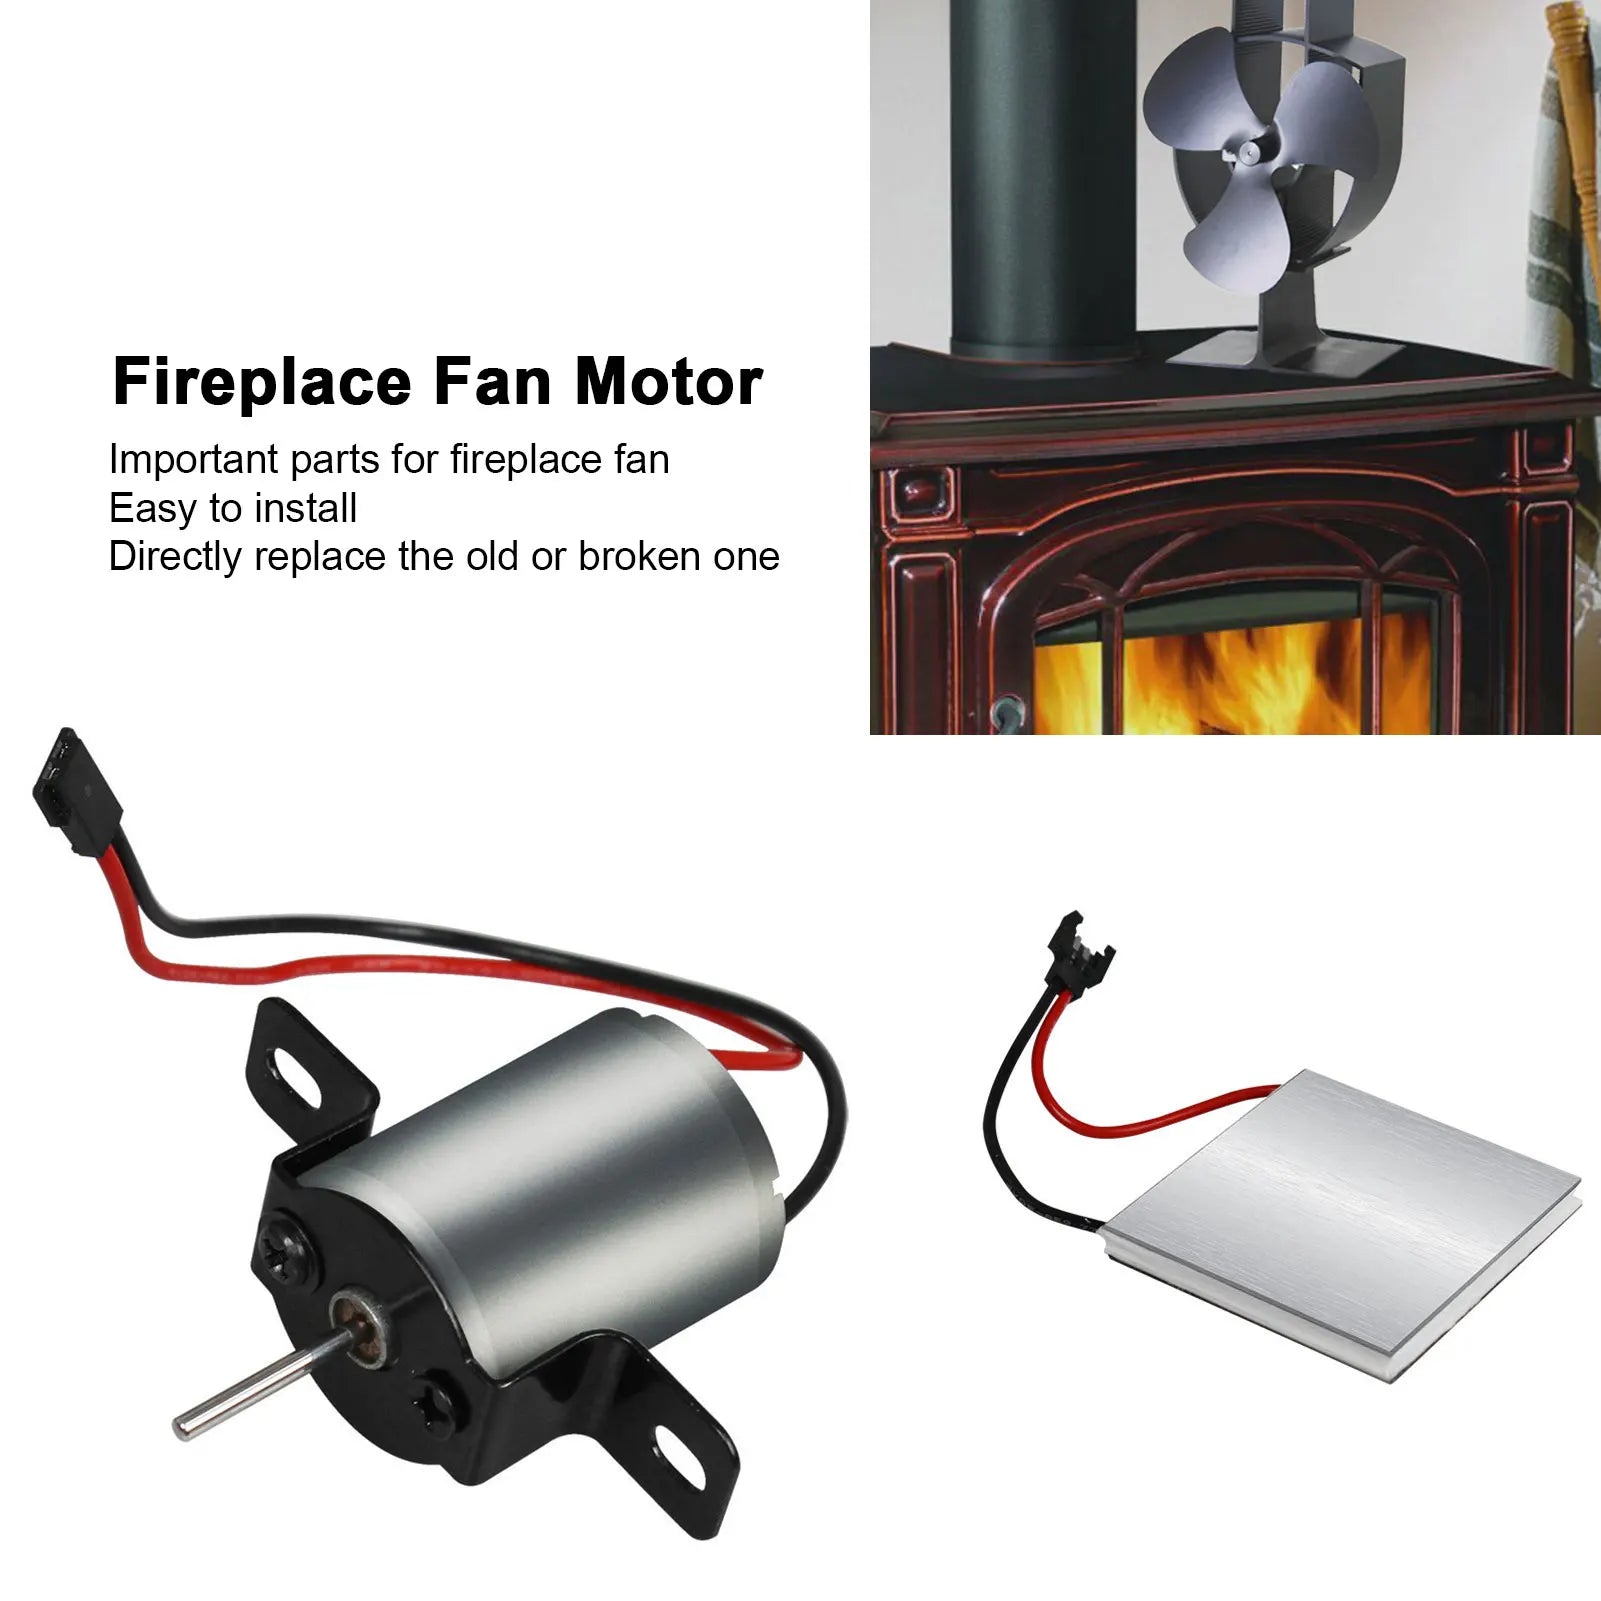 Fireplace Fan Motor Wood Stove Fan General Accessories Electric Power Generator With Power Generation Sheet Electric Fireplace